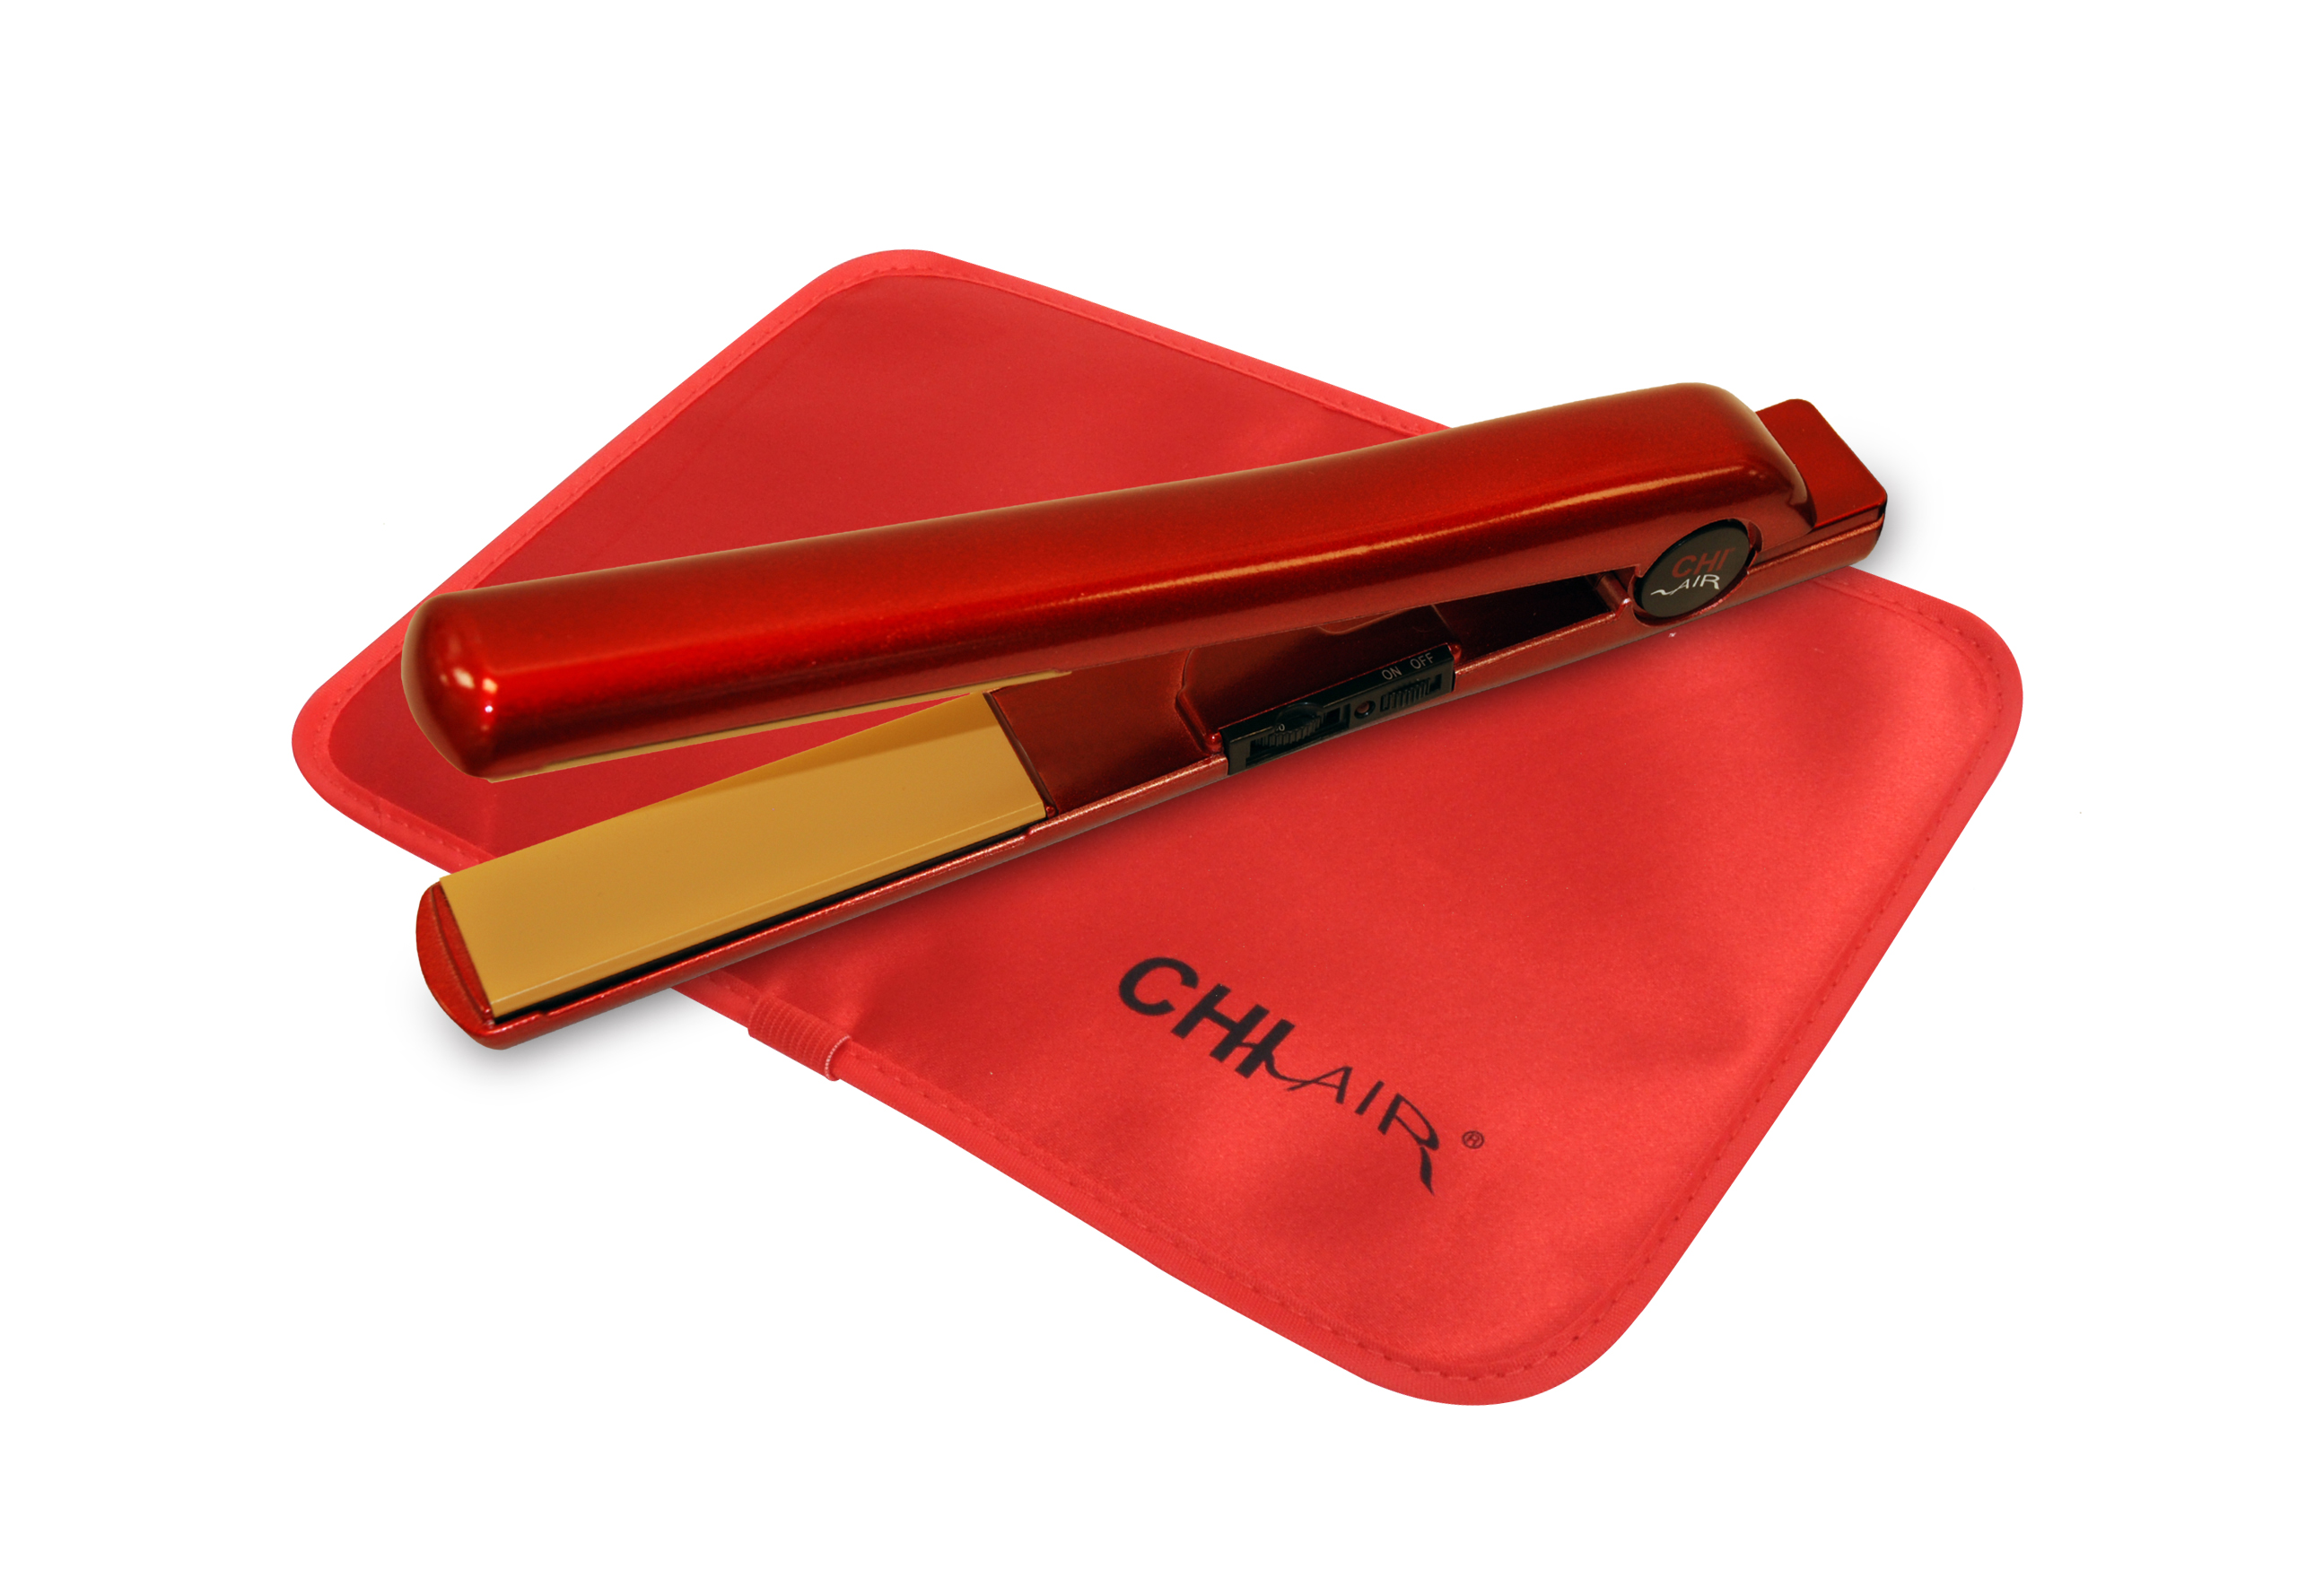 CHI Air Classic Tourmaline Ceramic 1" Flat Iron, Fire Red - image 1 of 3